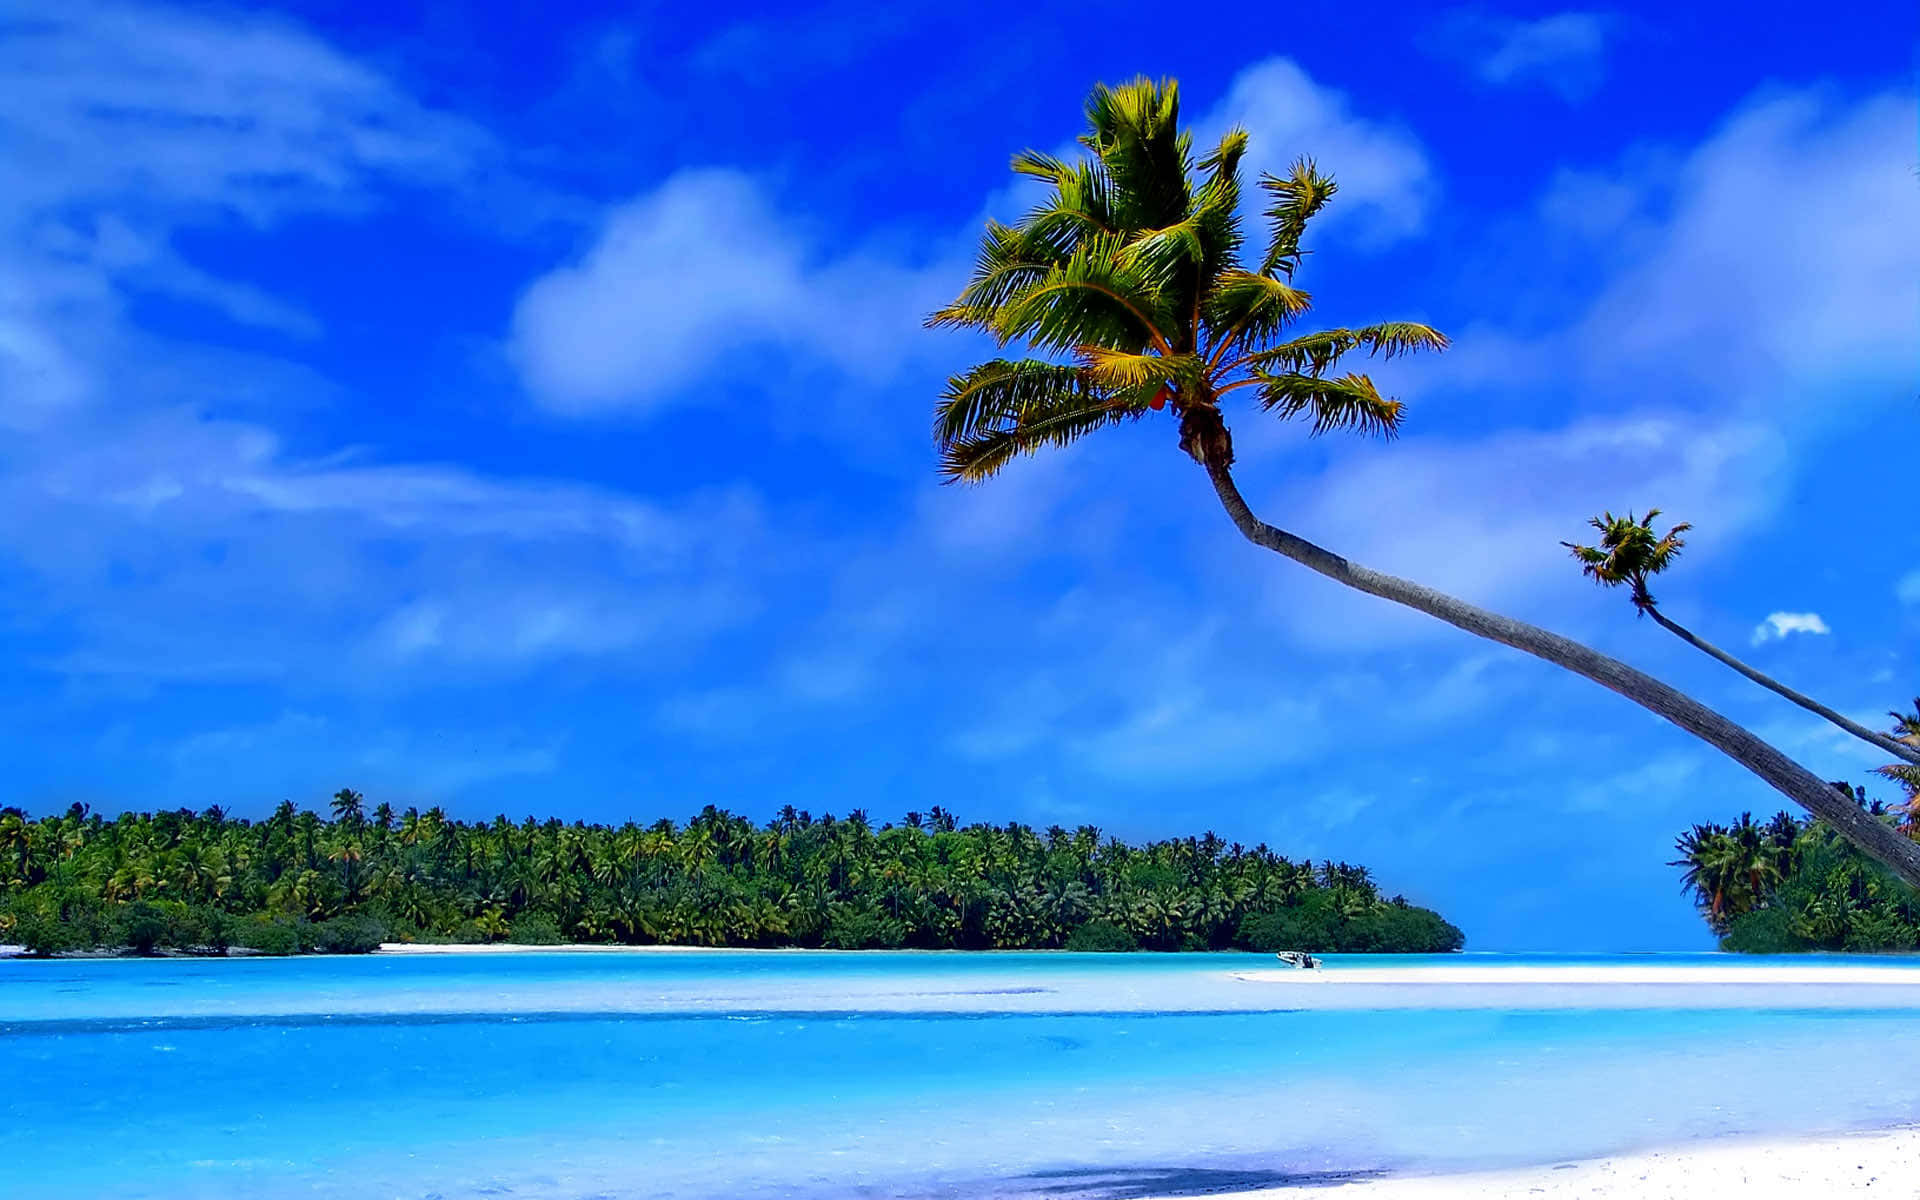 Rejuvenate amidst the calming sights of a Caribbean beach. Wallpaper